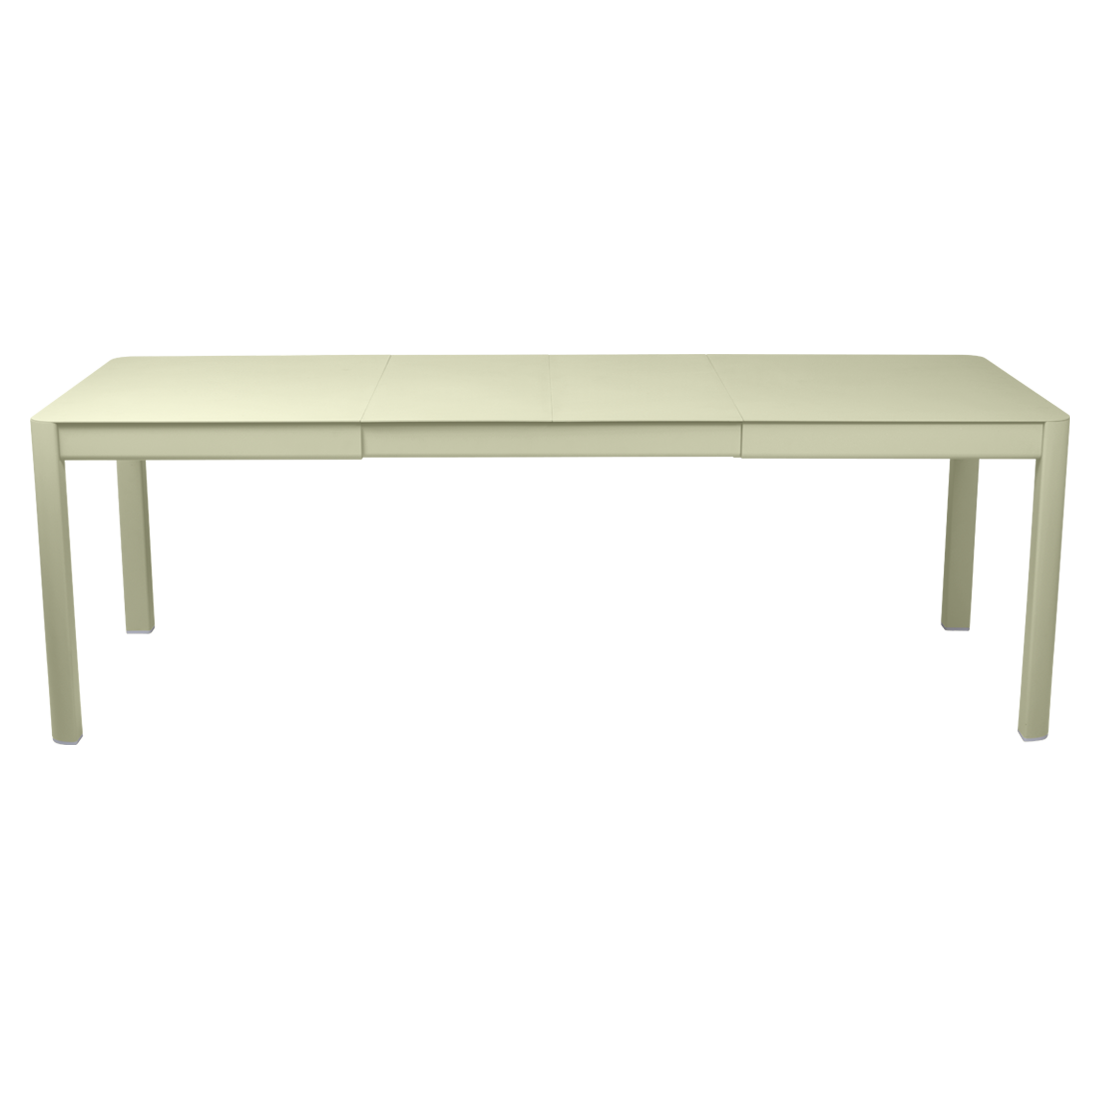 table de jardin vert, table metal allonge, table metal a rallonge, table metal rectangulaire, table fermob allonge